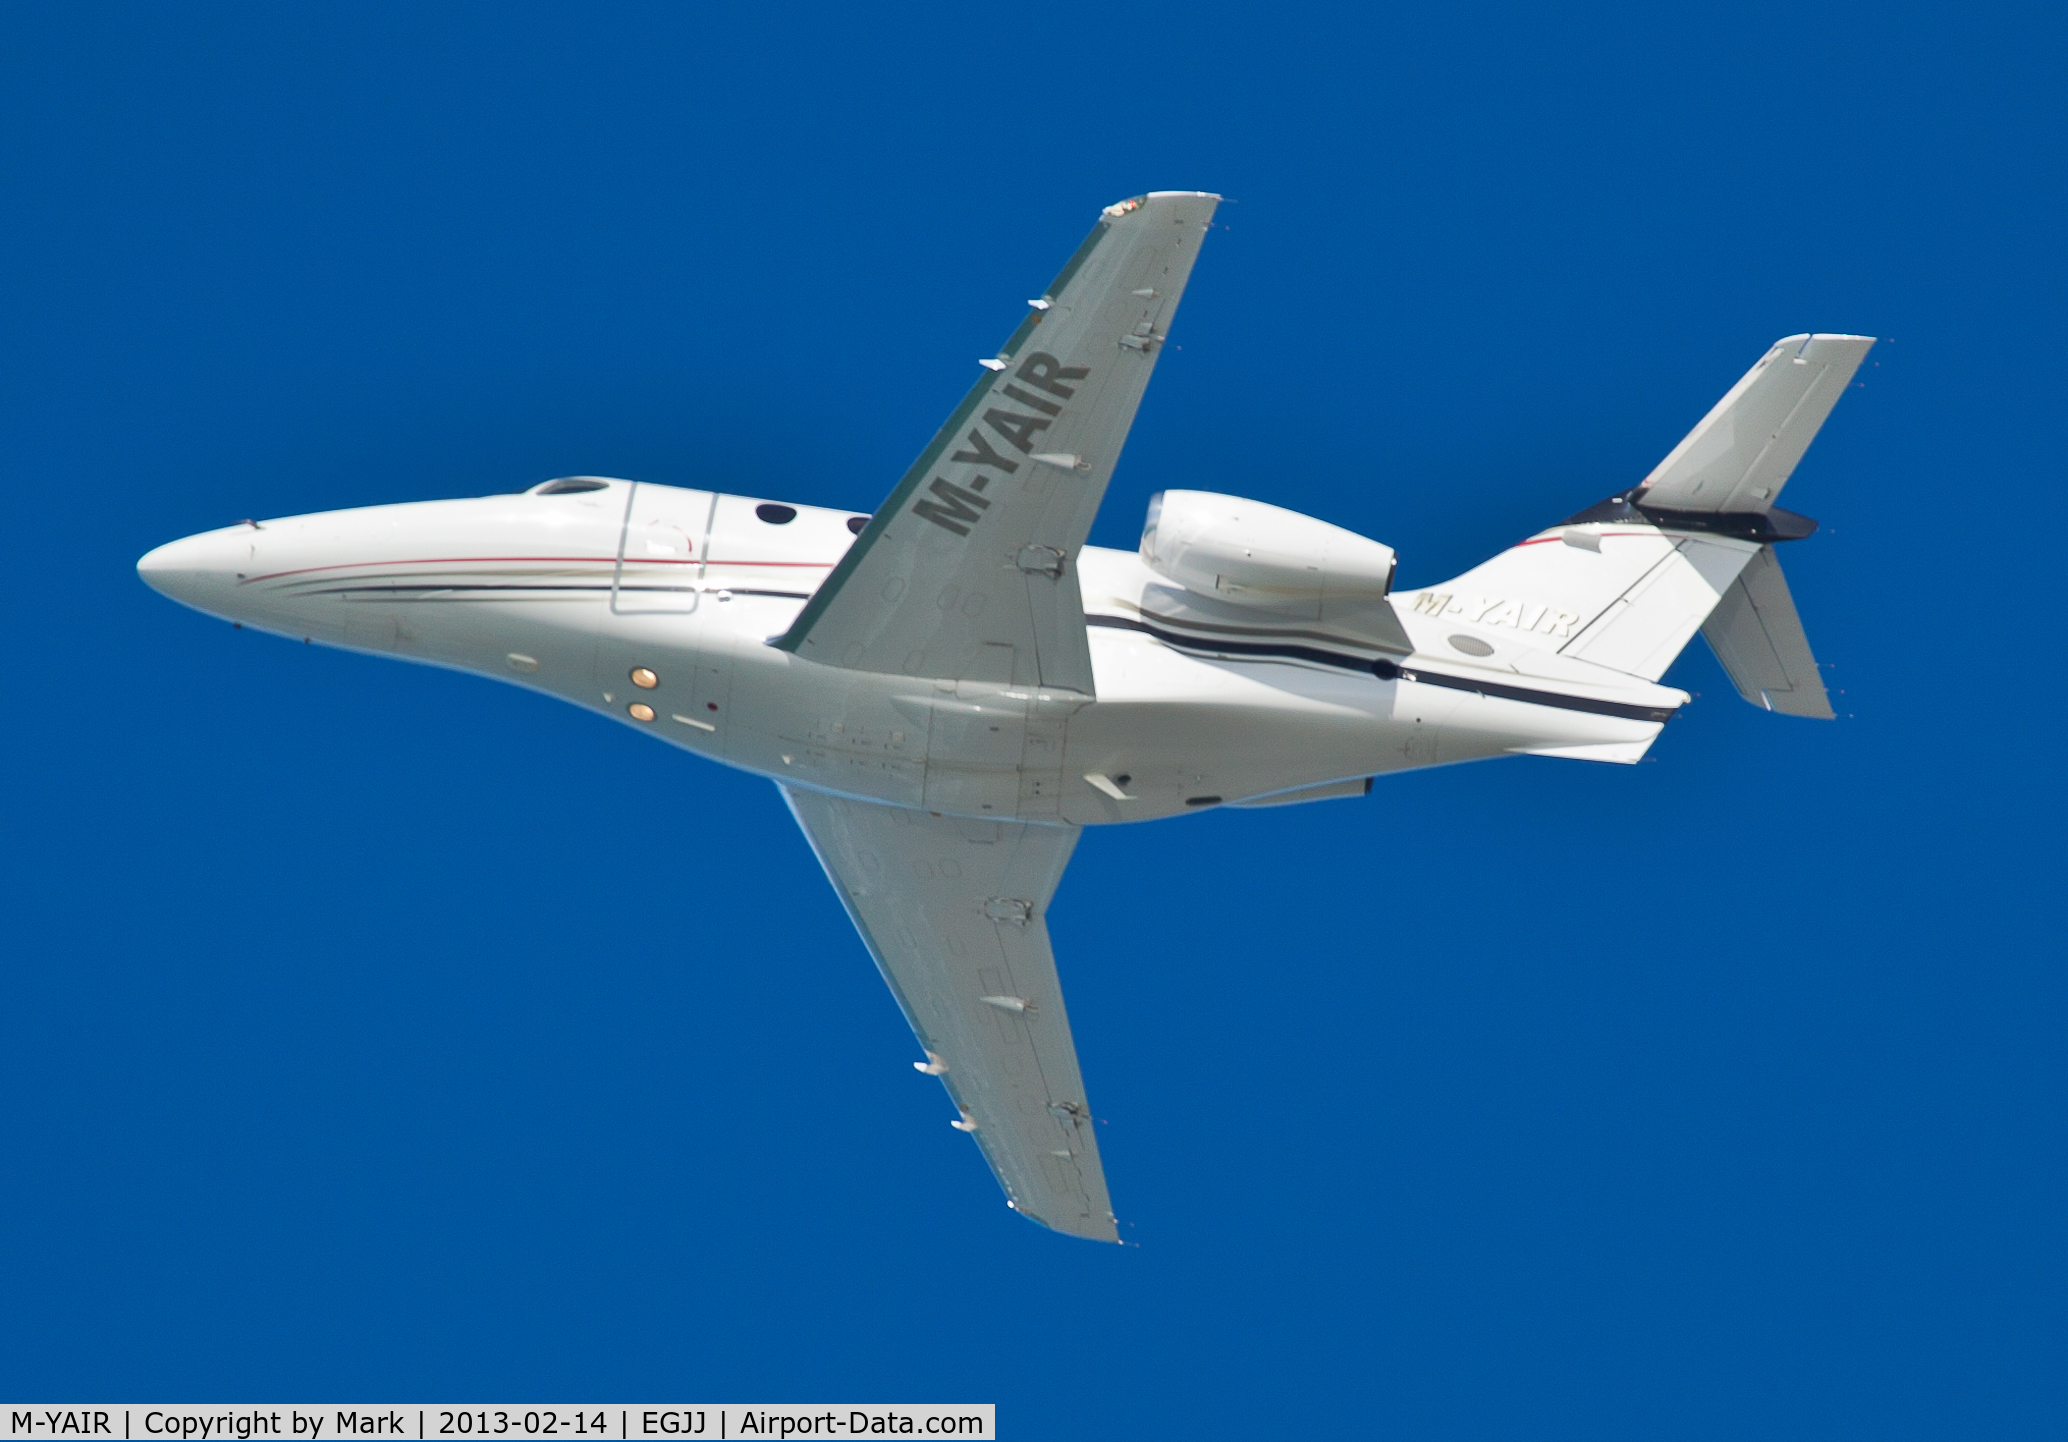 M-YAIR, 2005 Raytheon 390 Premier 1 C/N RB-146, Taken taking off from Jersey.